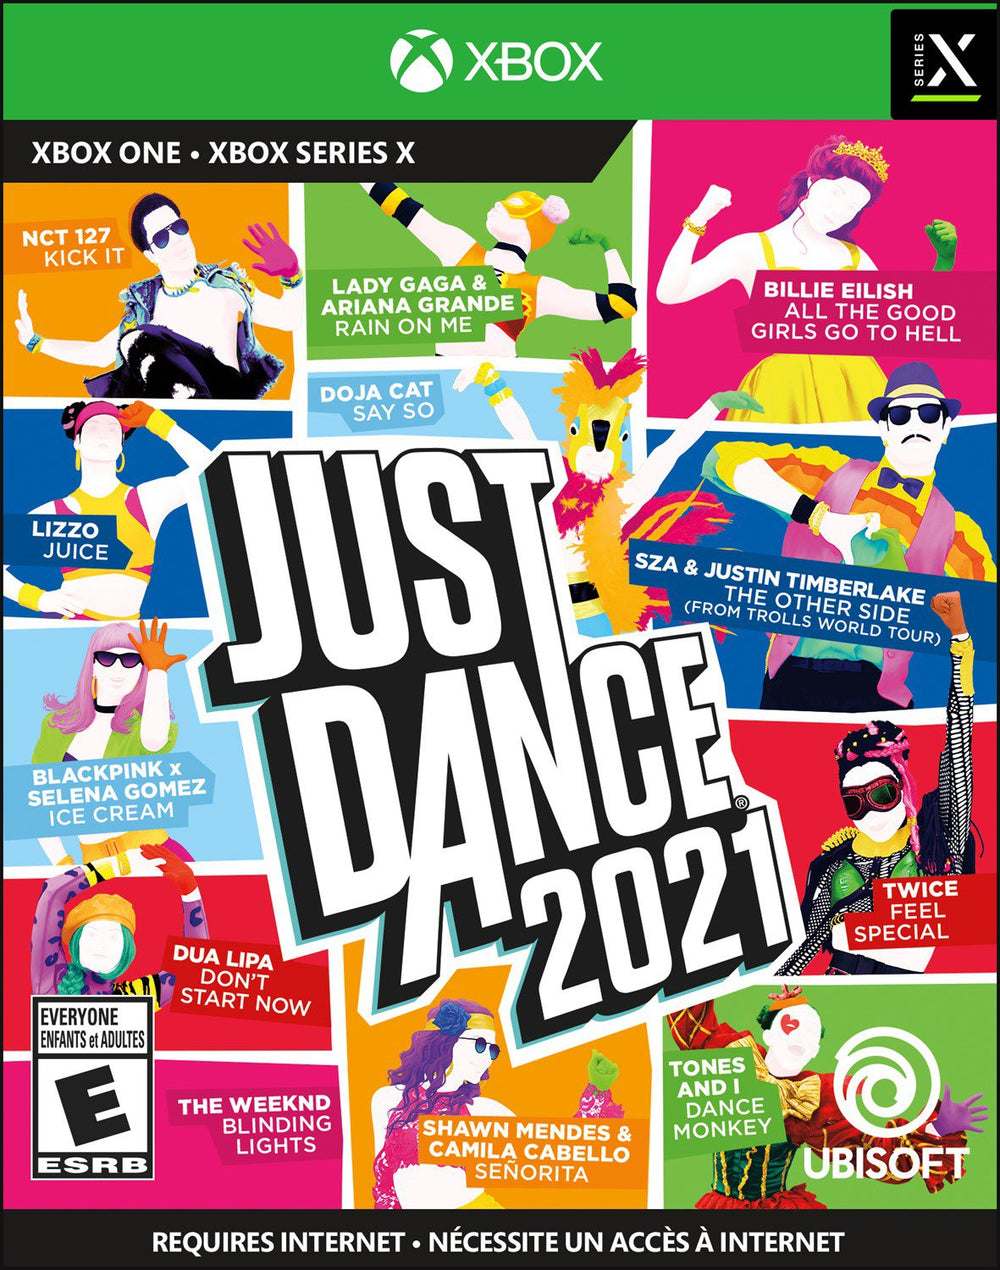 Just Dance 2021 [Xbox]